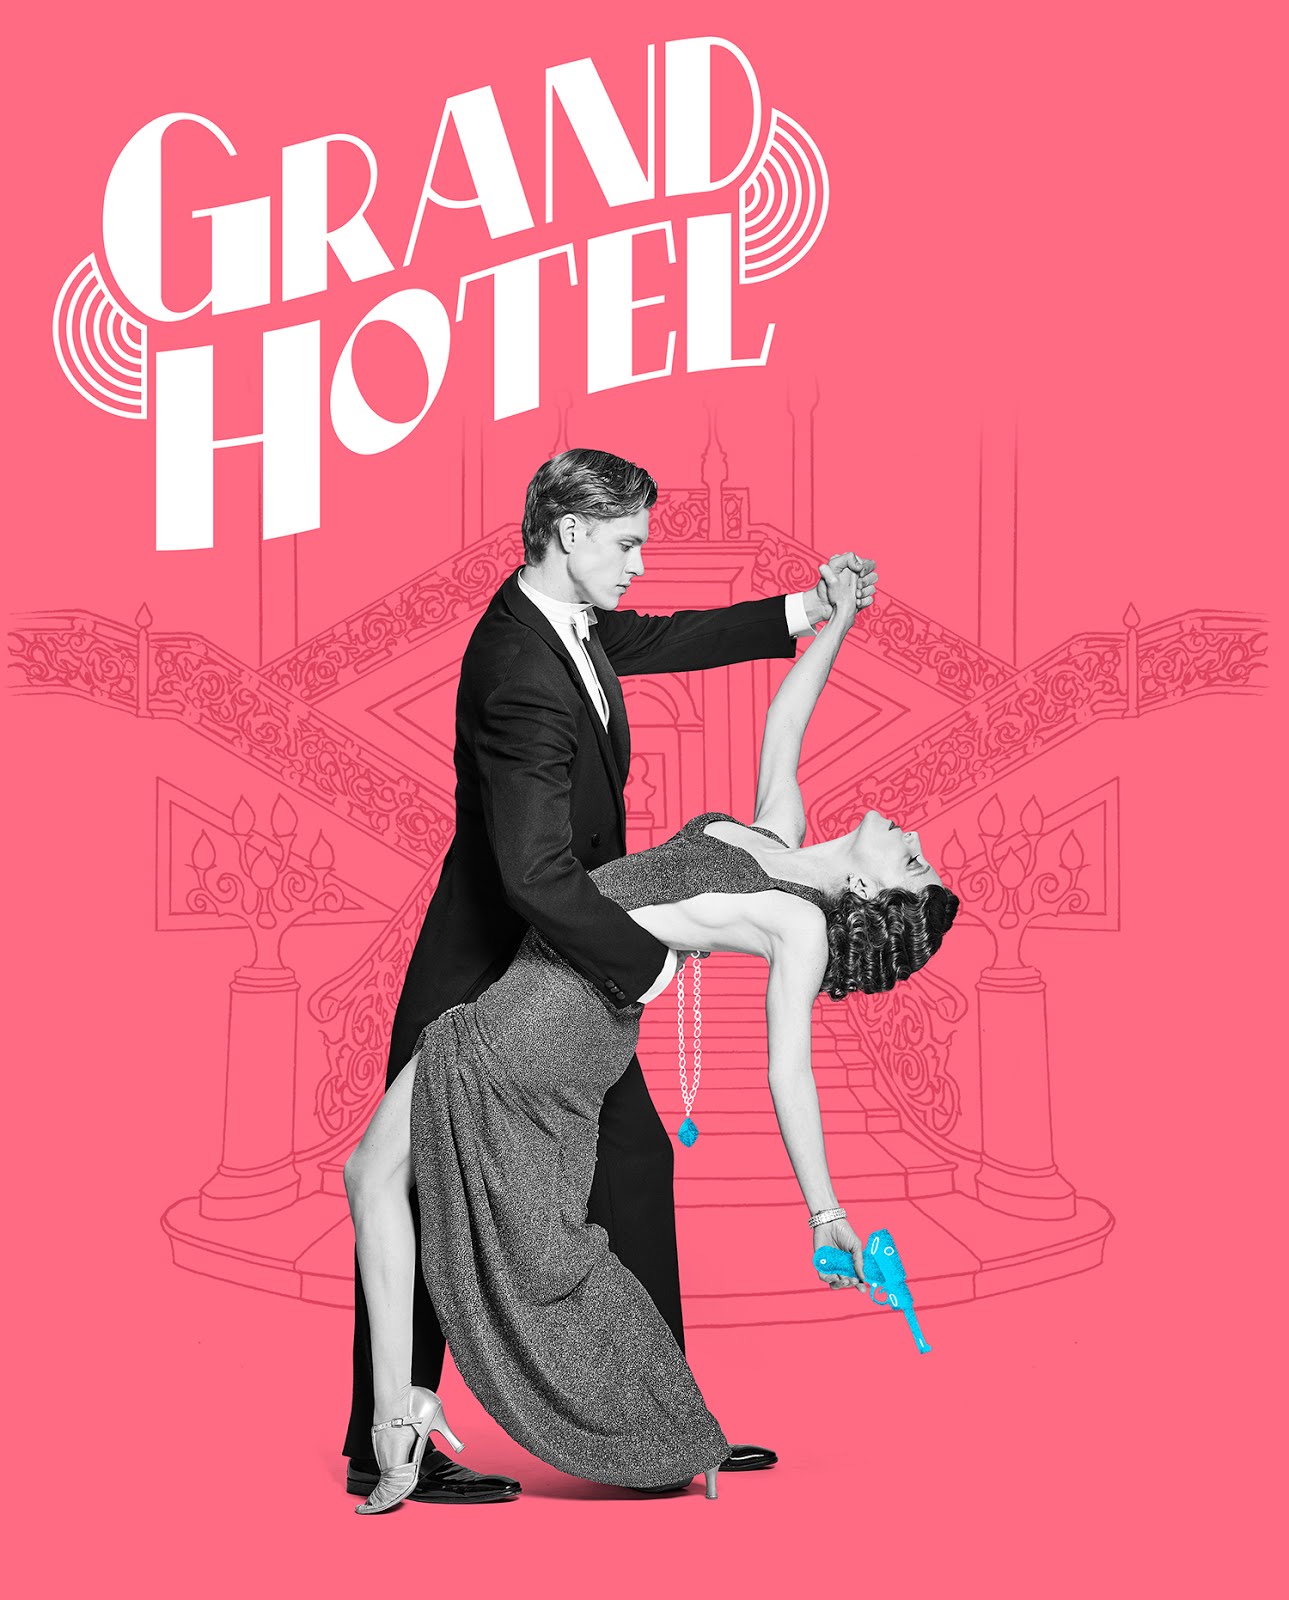 Shaw 2018 - Grand Hotel